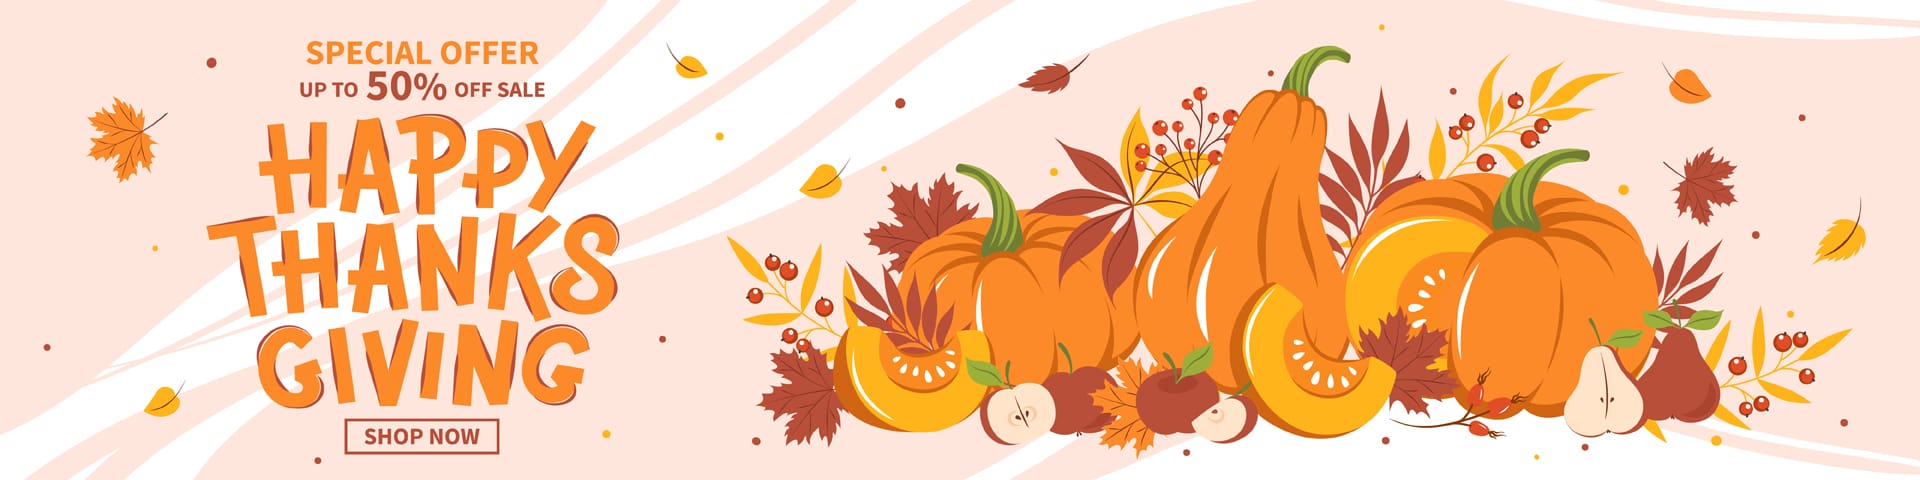 Happy thanksgiving banner seasonal poster image